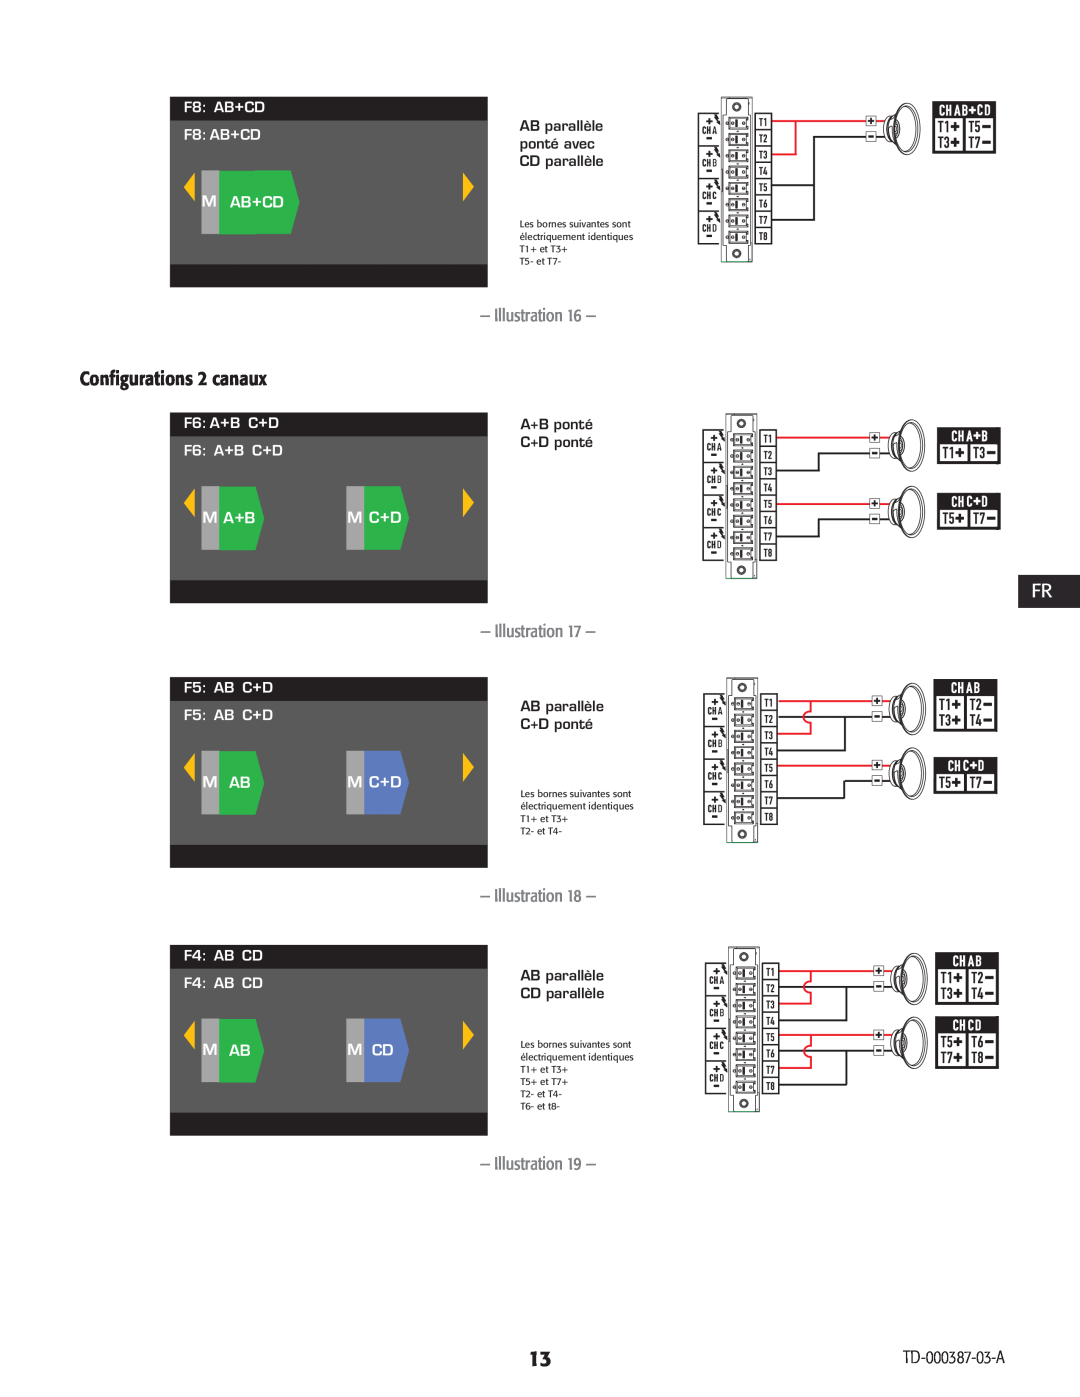 QSC Audio CXD4.5, CXD4.2, CXD4.3 manual Configurations 2 canaux, M Ab+Cd, Illustration 